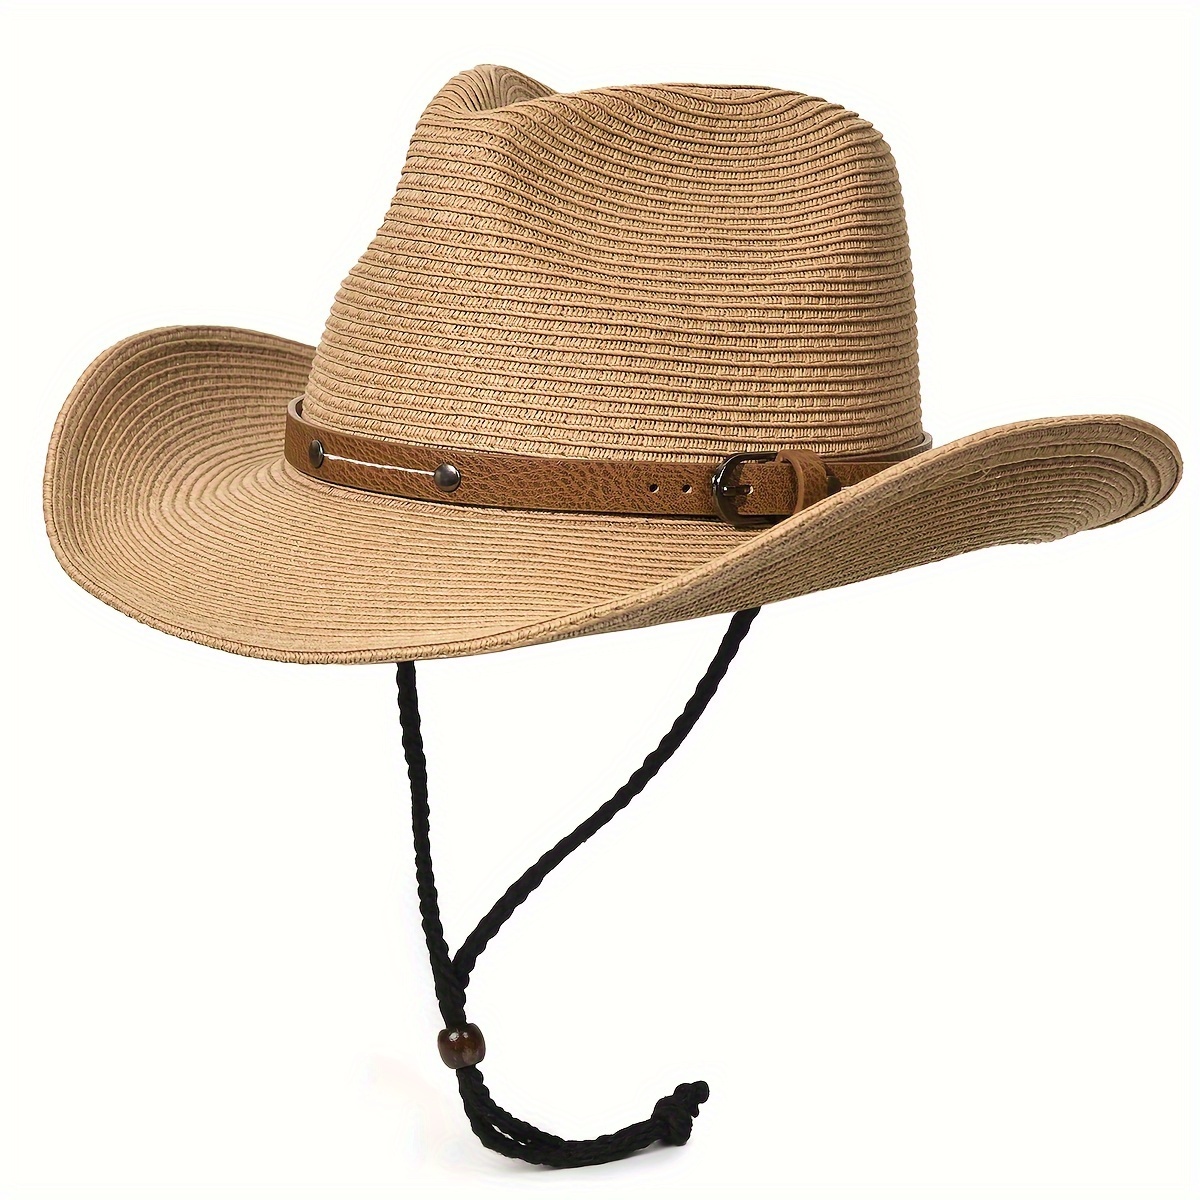 Adjustable Spring Summer Outdoor Sun Hat For Men Women With Wide